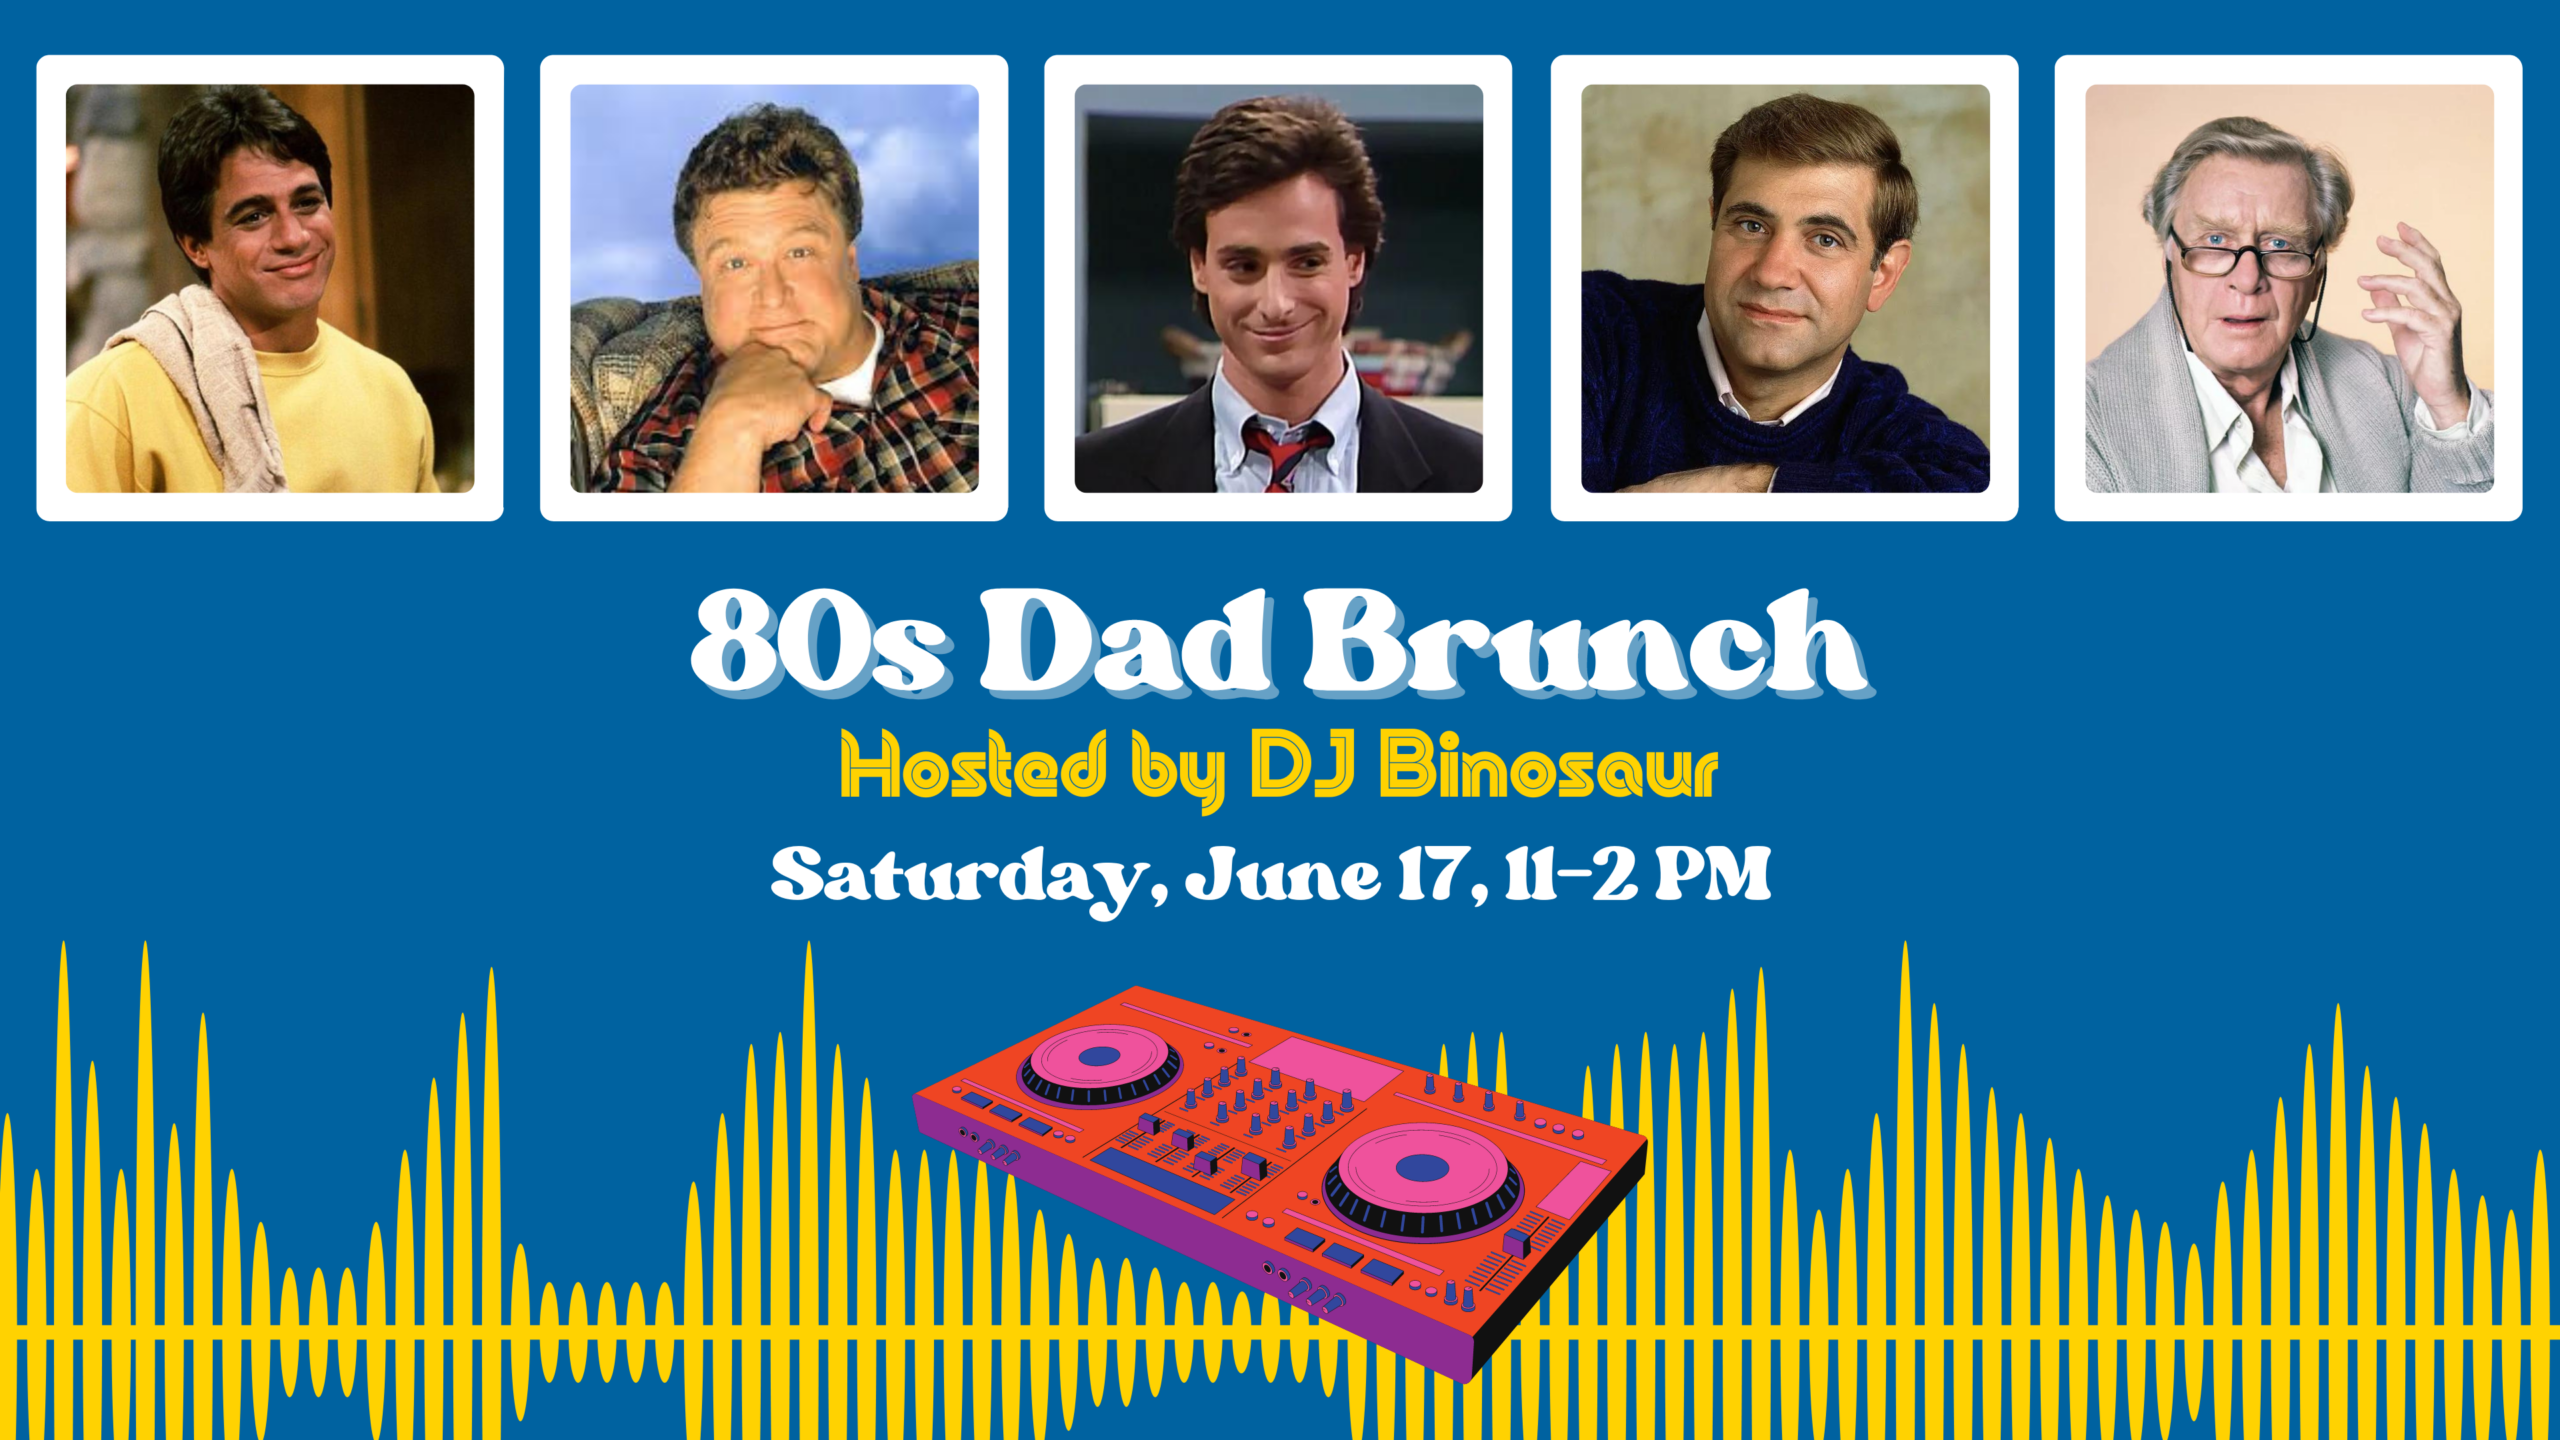 80s Dad Brunch with DJ Binosaur at On Rotation